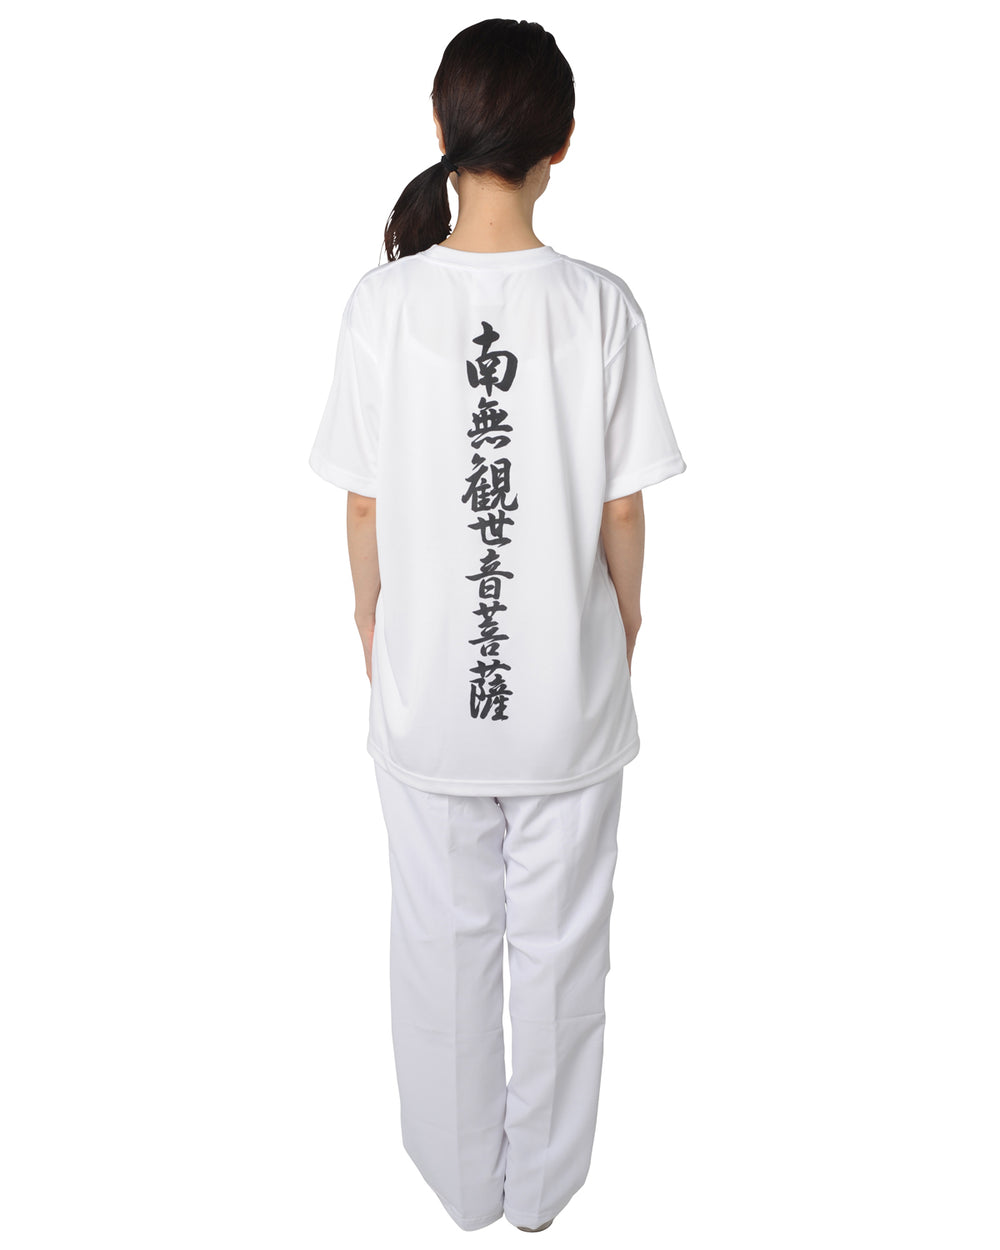 IPPO-IPPO-DO Pilgrimage T-shirt with Printed Phrases on the Back (Namu Kanzeon Bosatsu/南無観世音菩薩)